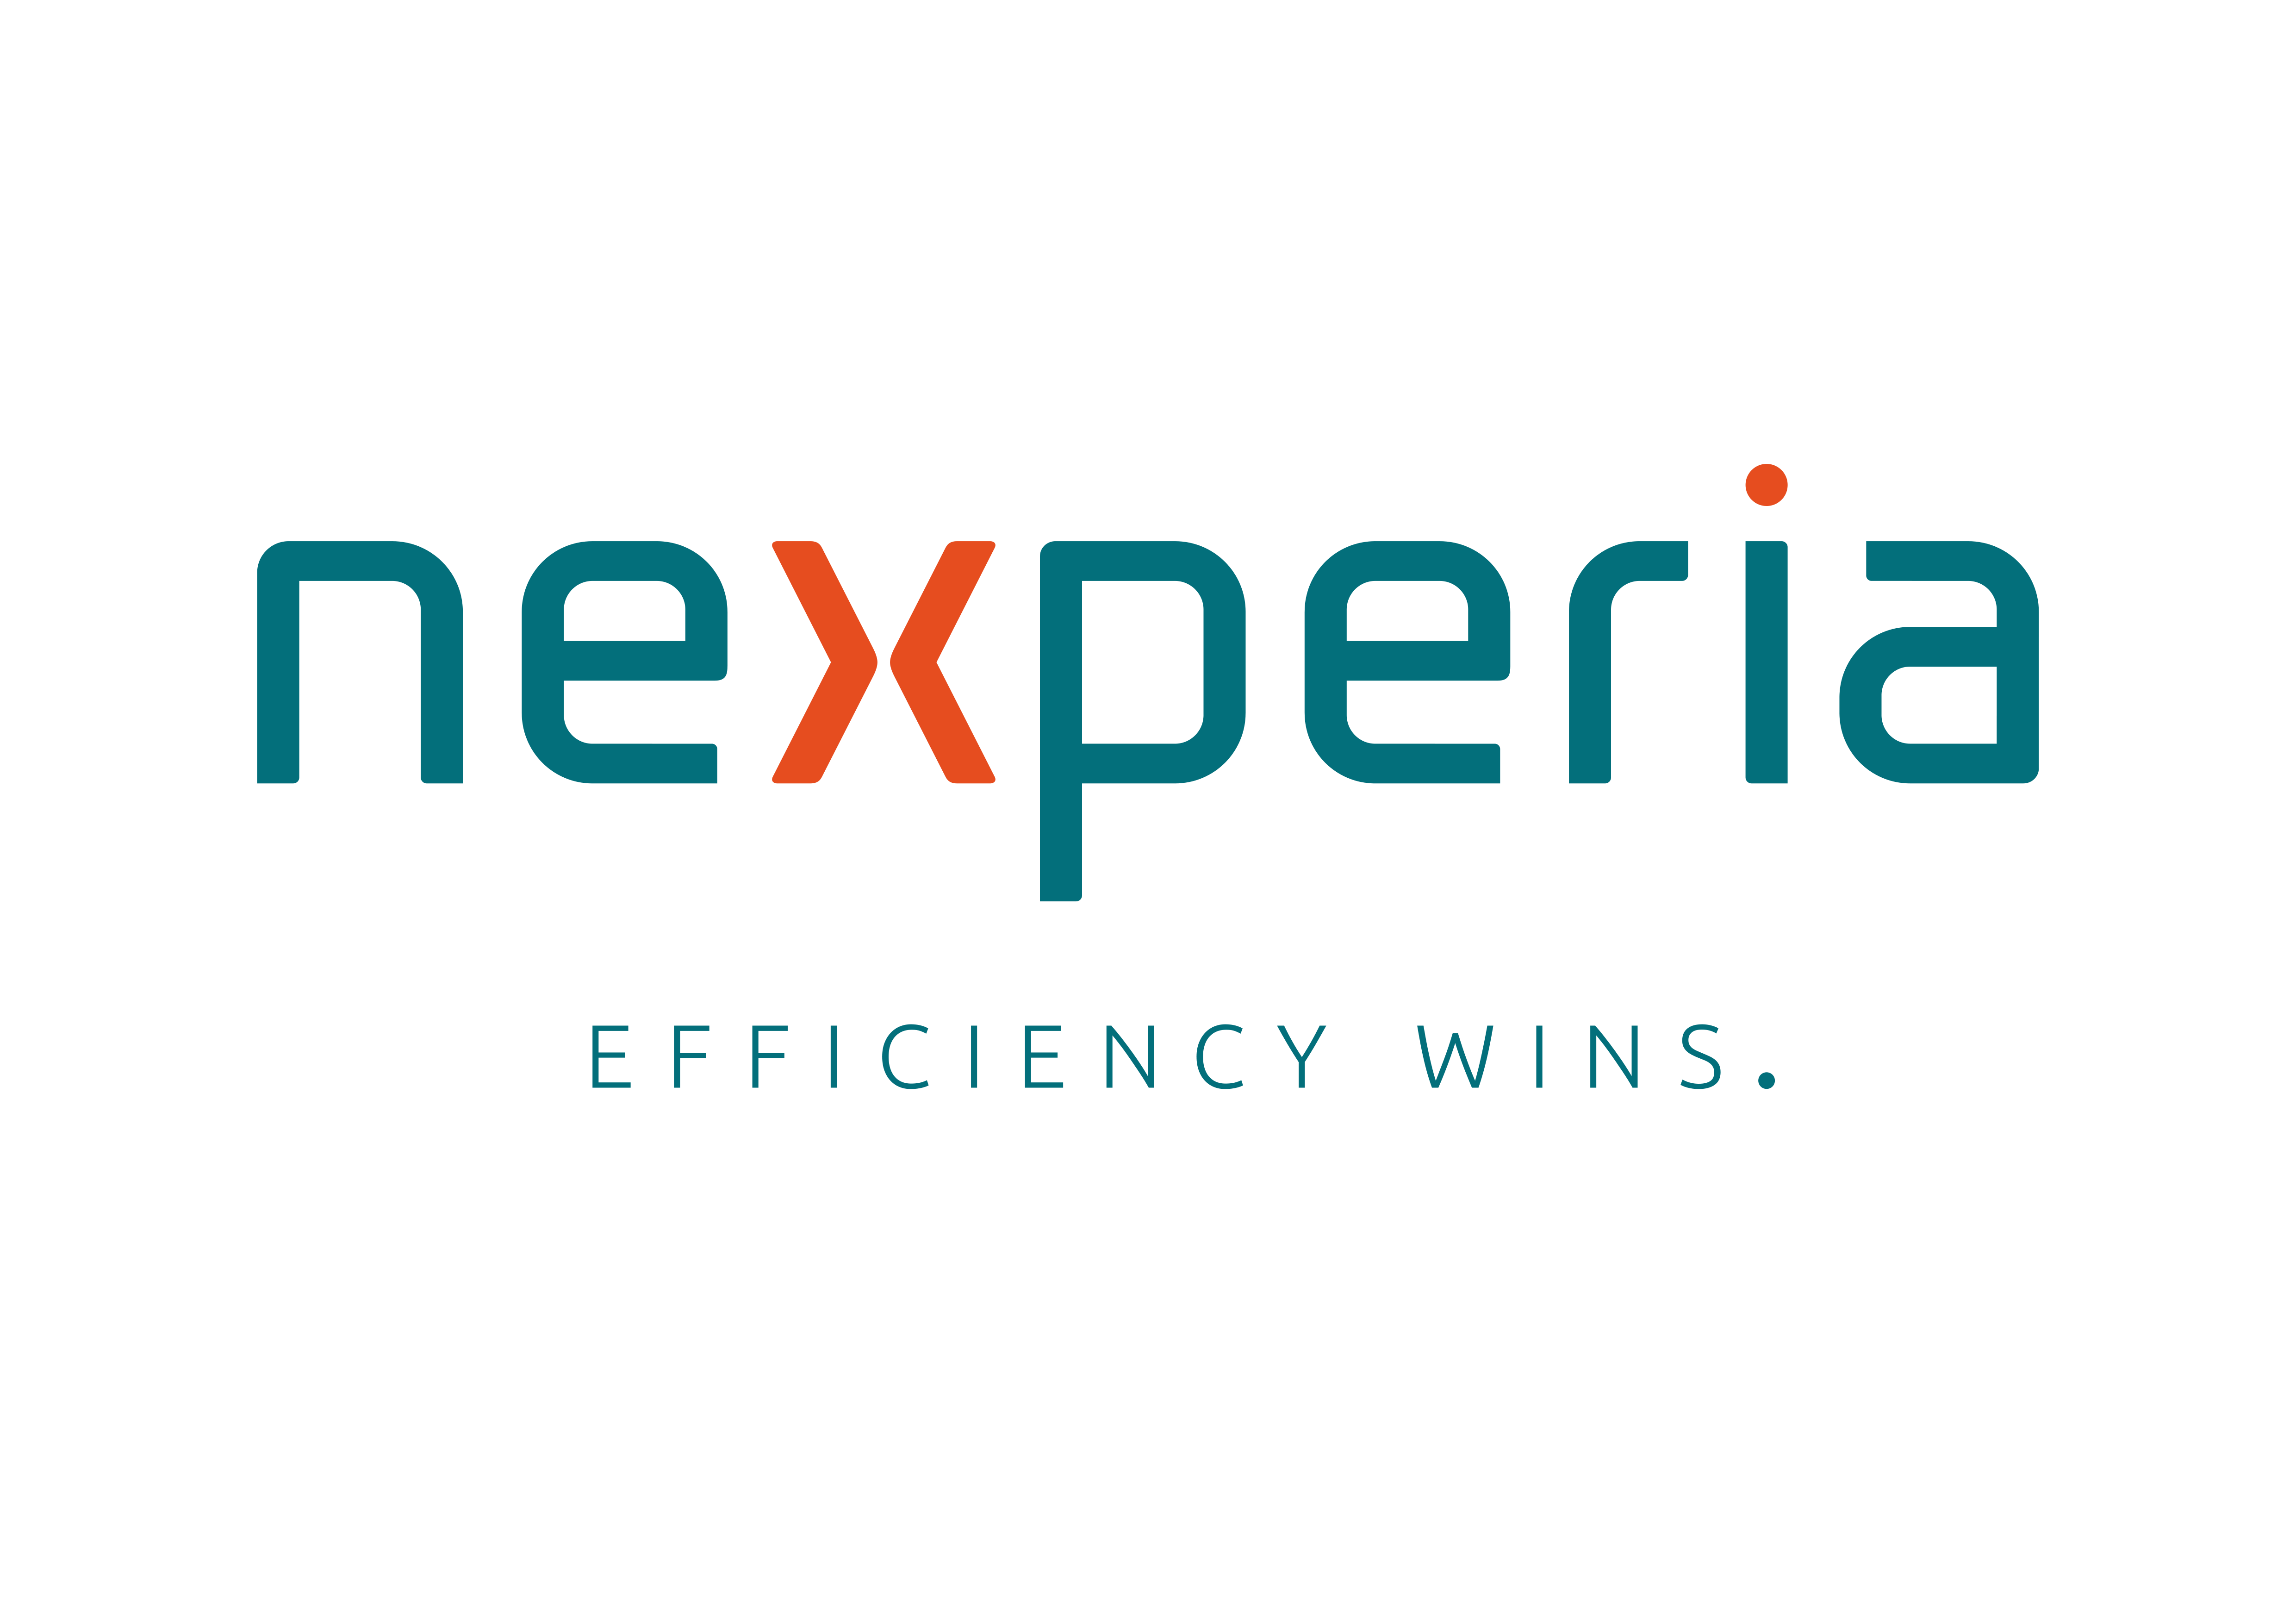 Nexperia-logo